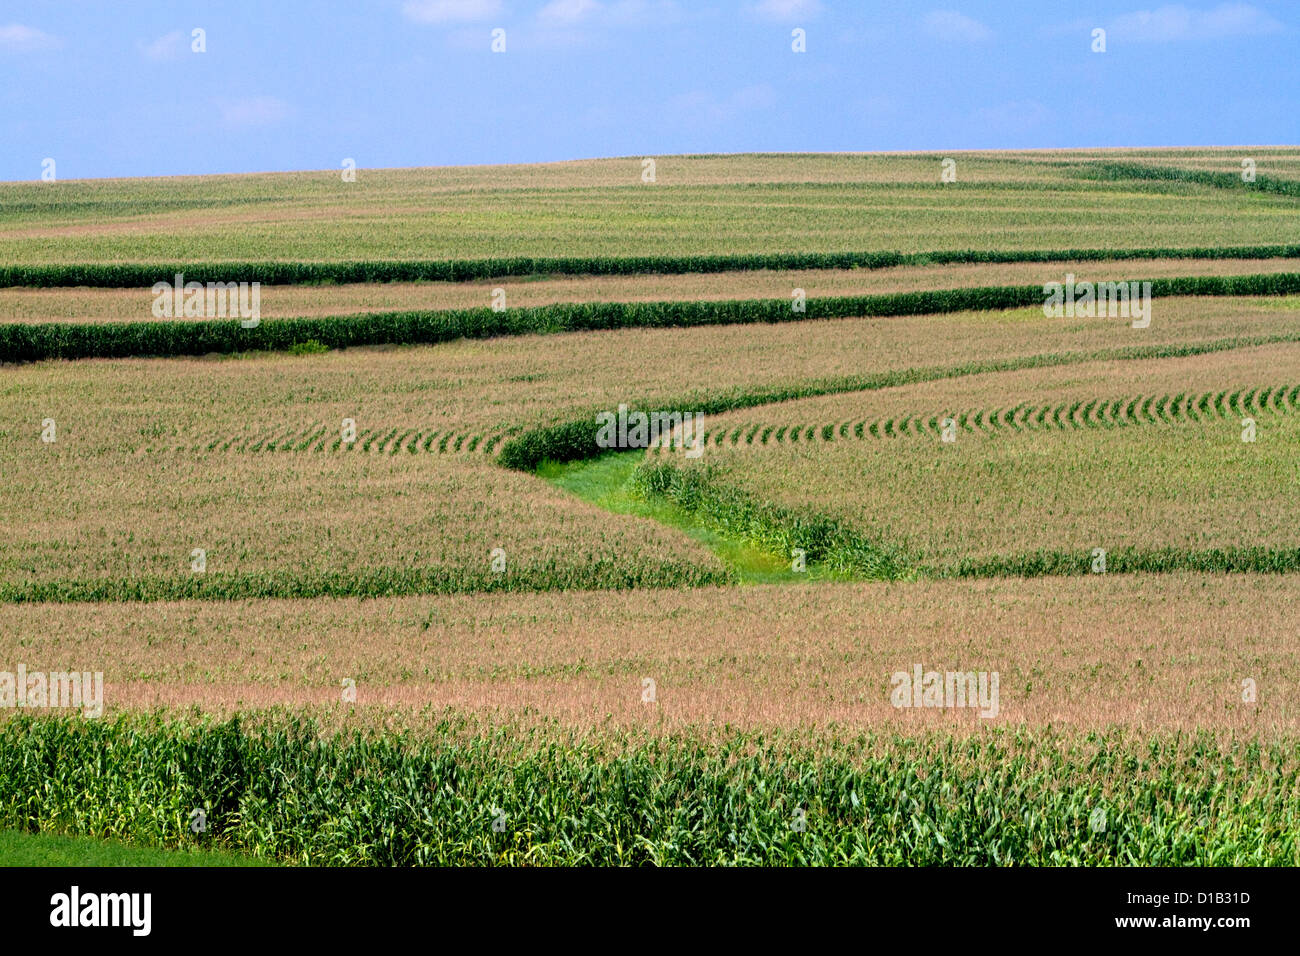 Patterns in corn crop located in Iowa, USA. Stock Photo